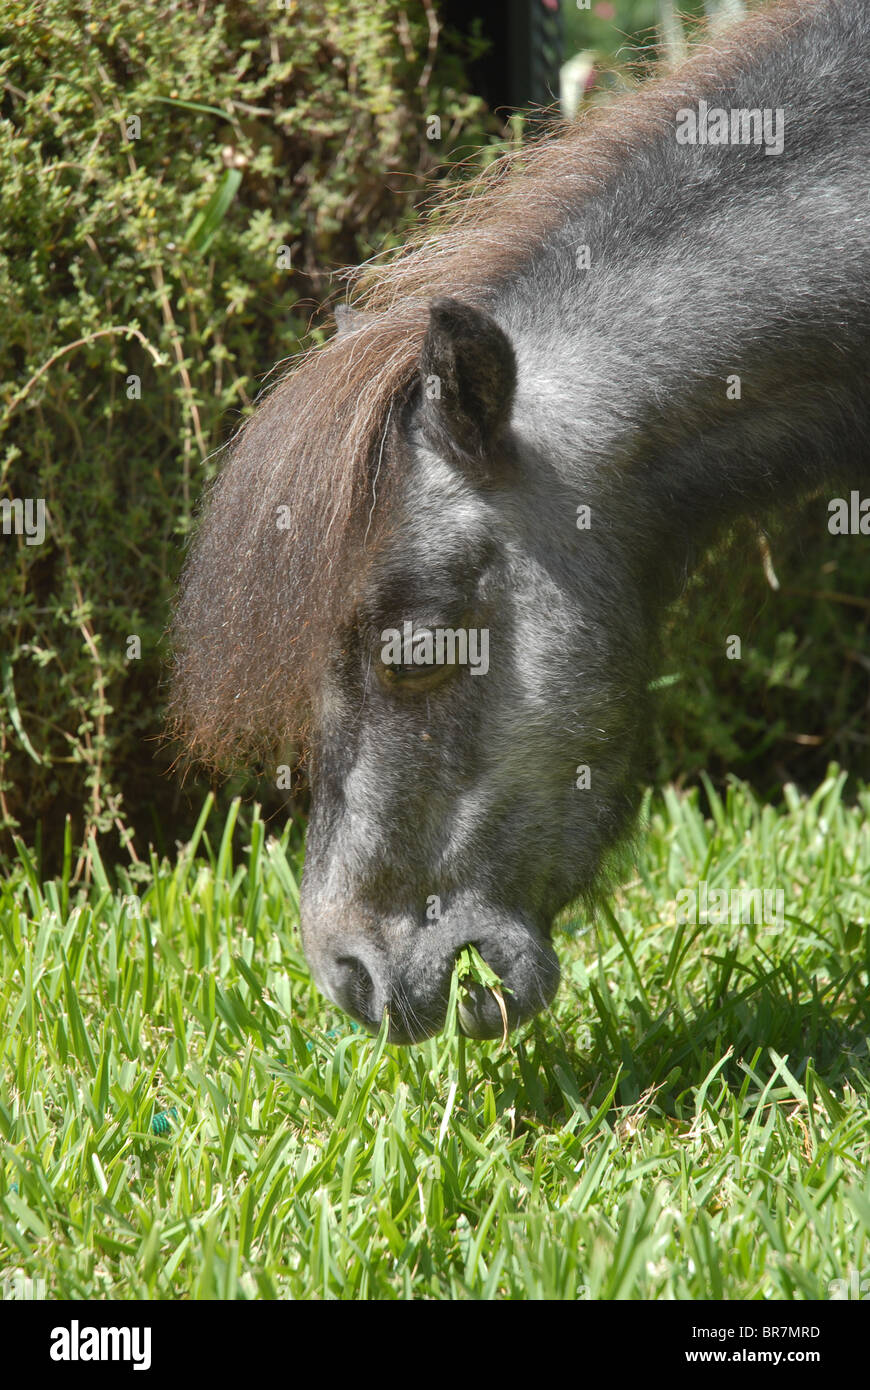 Falabella miniature horse grazing, Spain Stock Photo